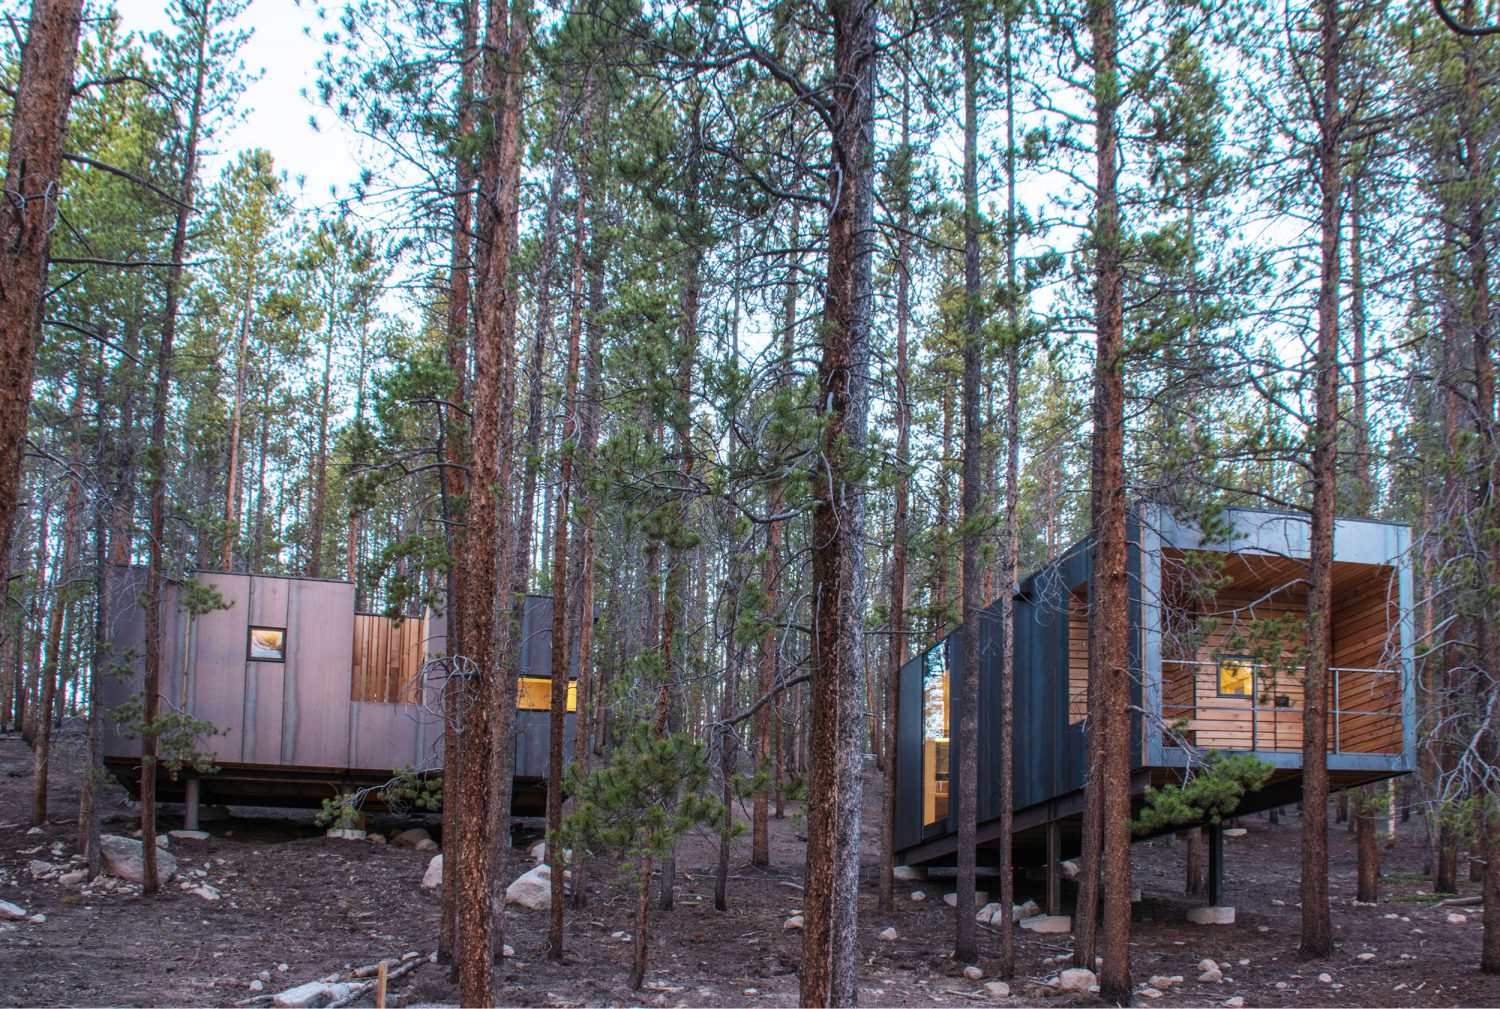 COBS Year-Round Micro Cabins by Colorado Building Workshop